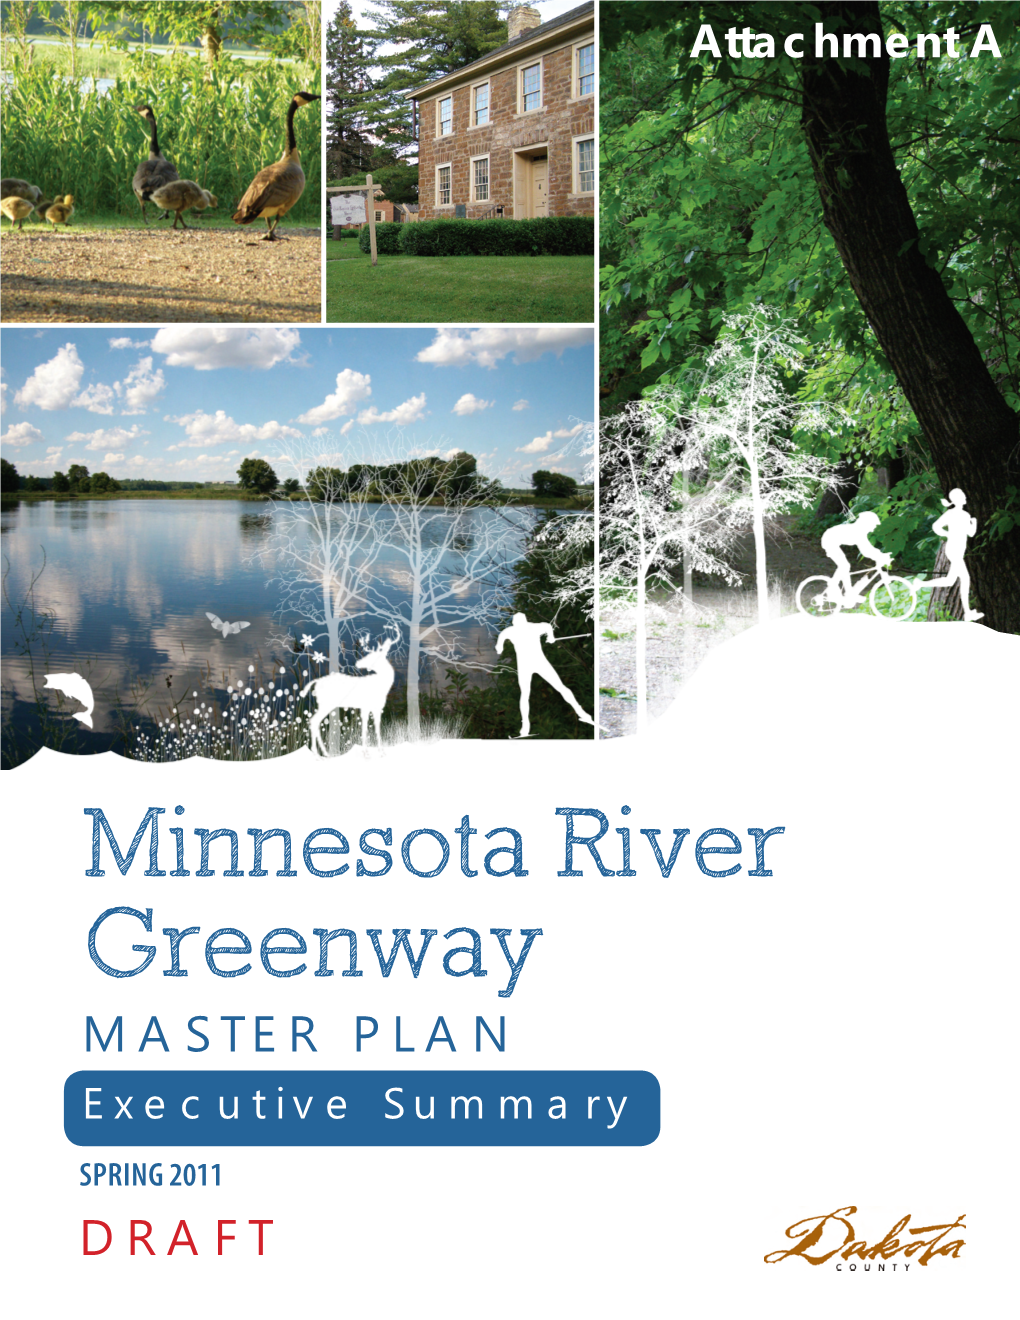 Minnesota River Greenway Master Plan Executive Summary Spring 2011 Draft INTRODUCTION